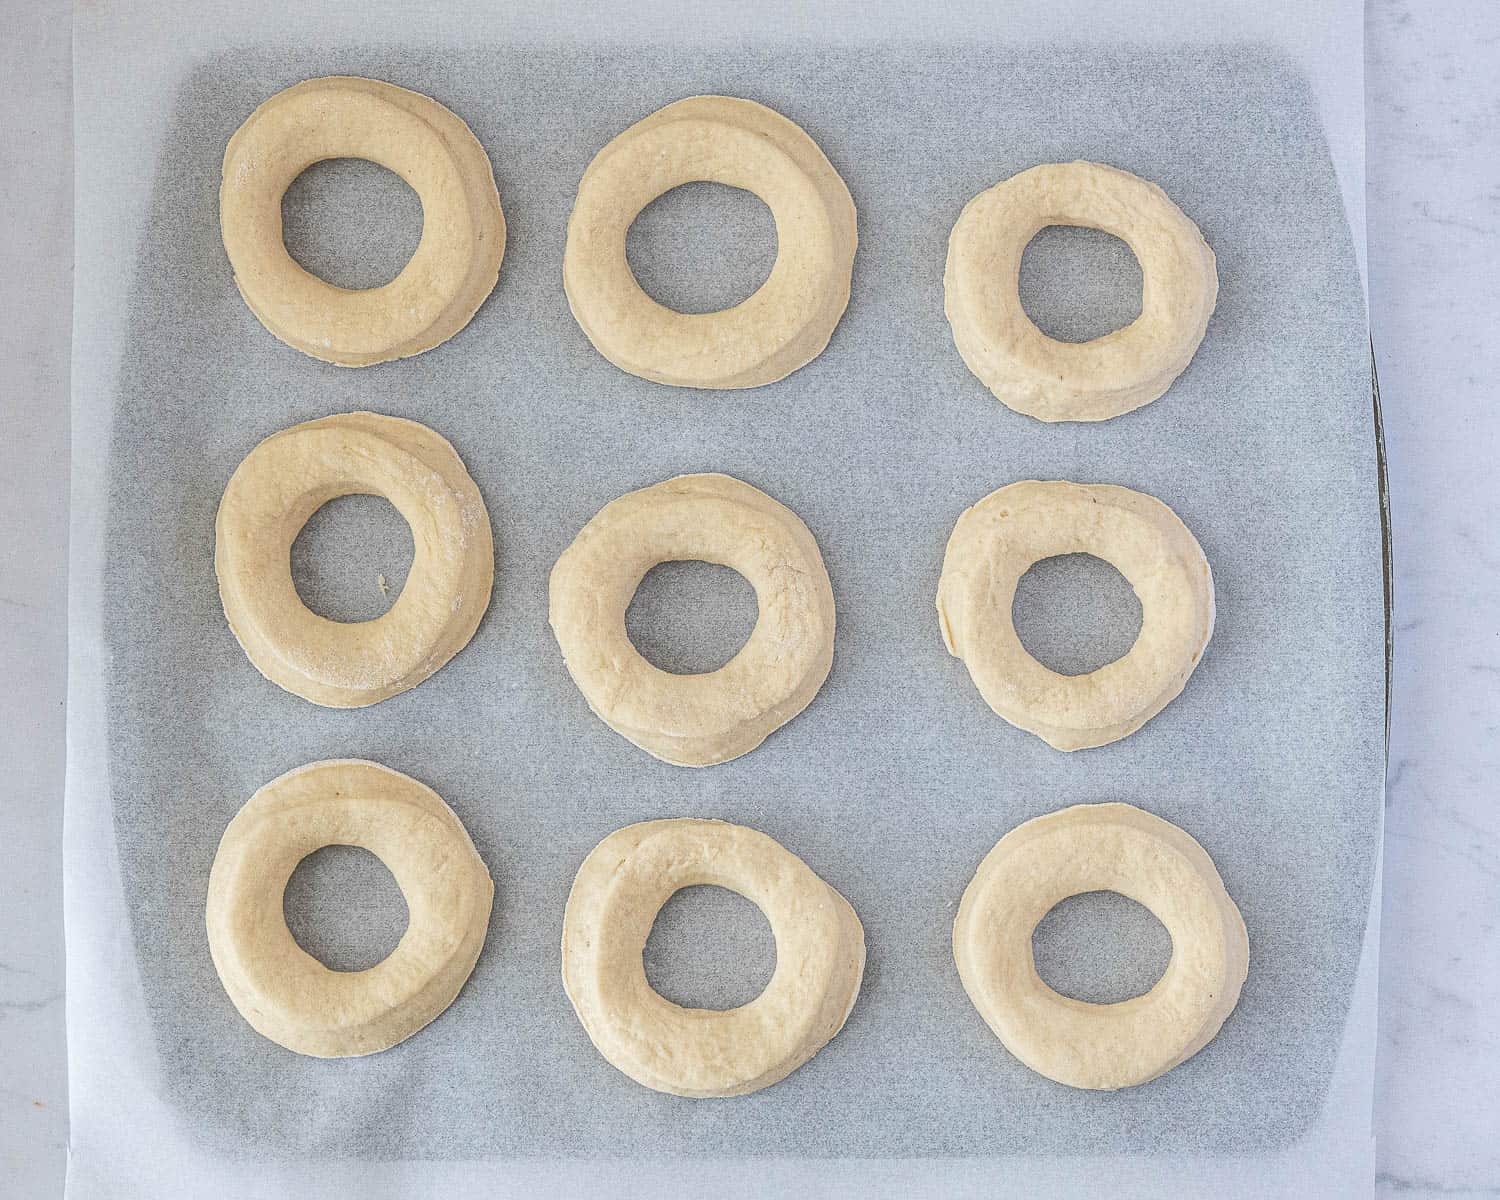 The shaped doughnuts on a baking sheet.